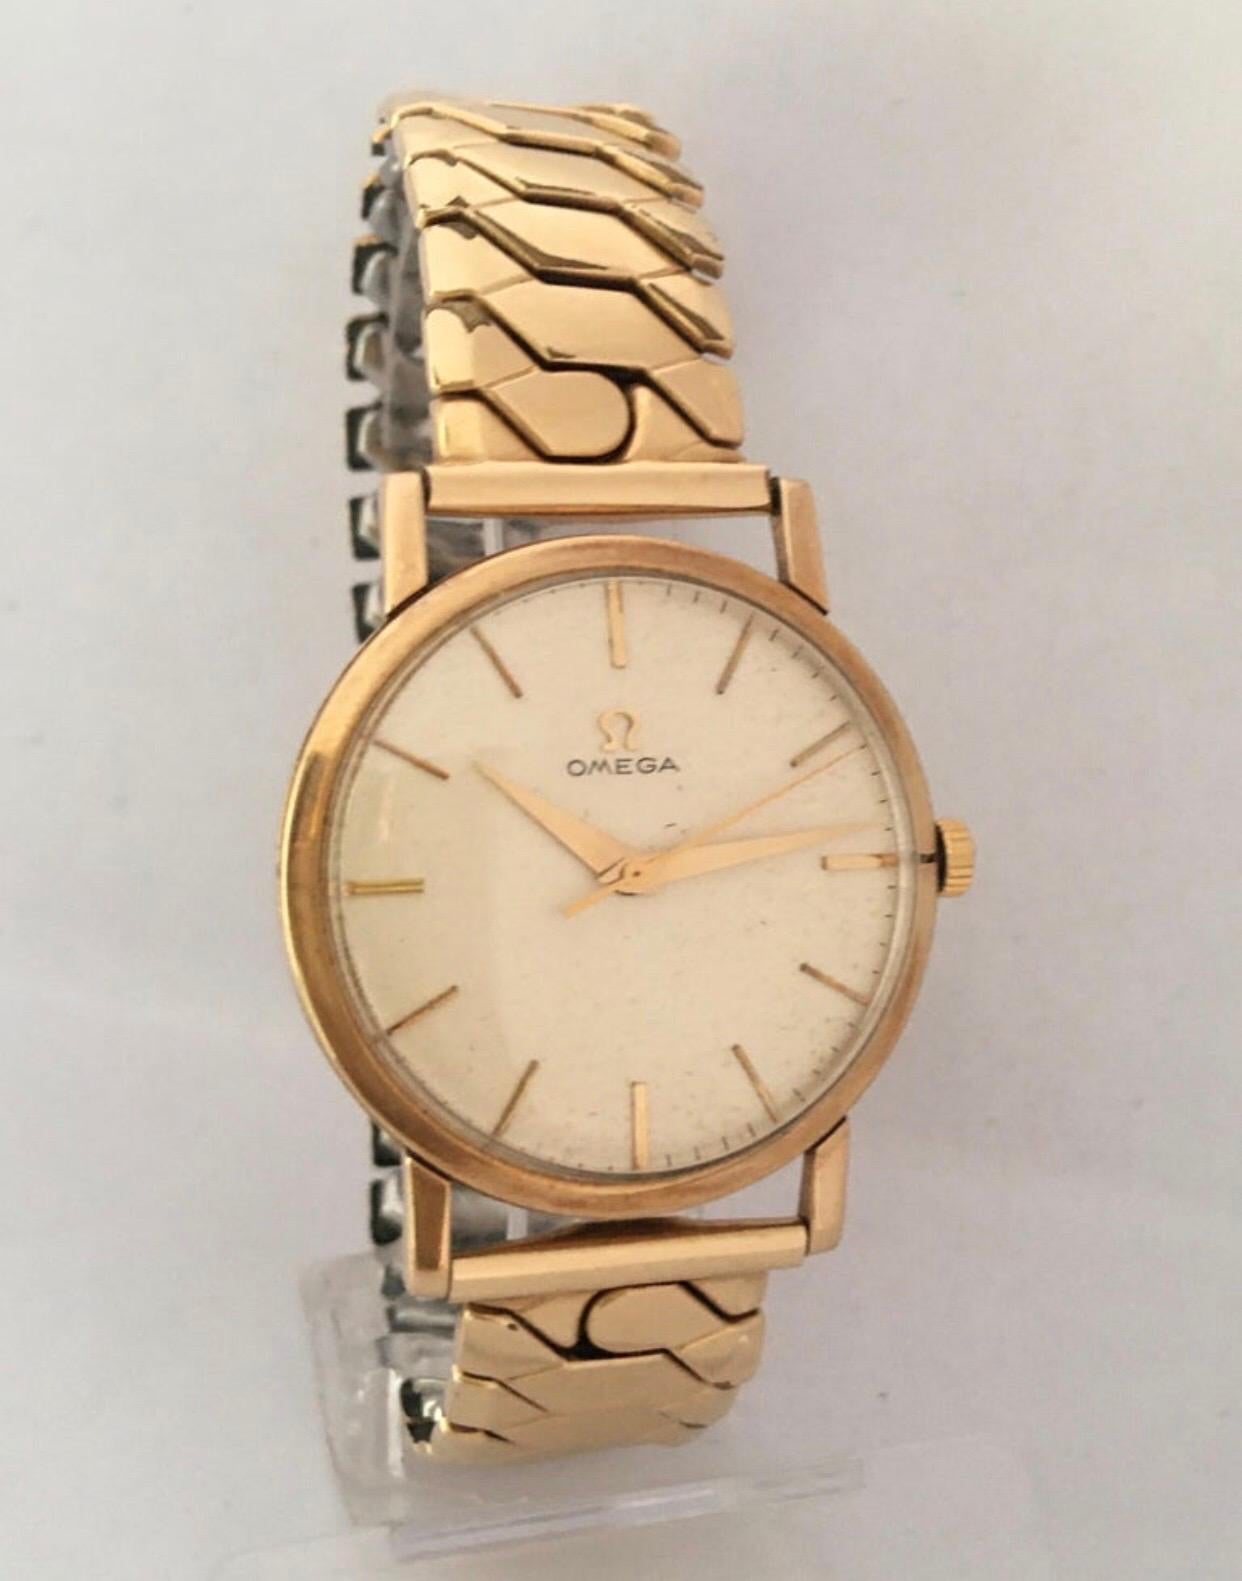 9 Karat Gold and Rolled Gold Bracelet 1960s Omega Mechanical Watch For Sale 8